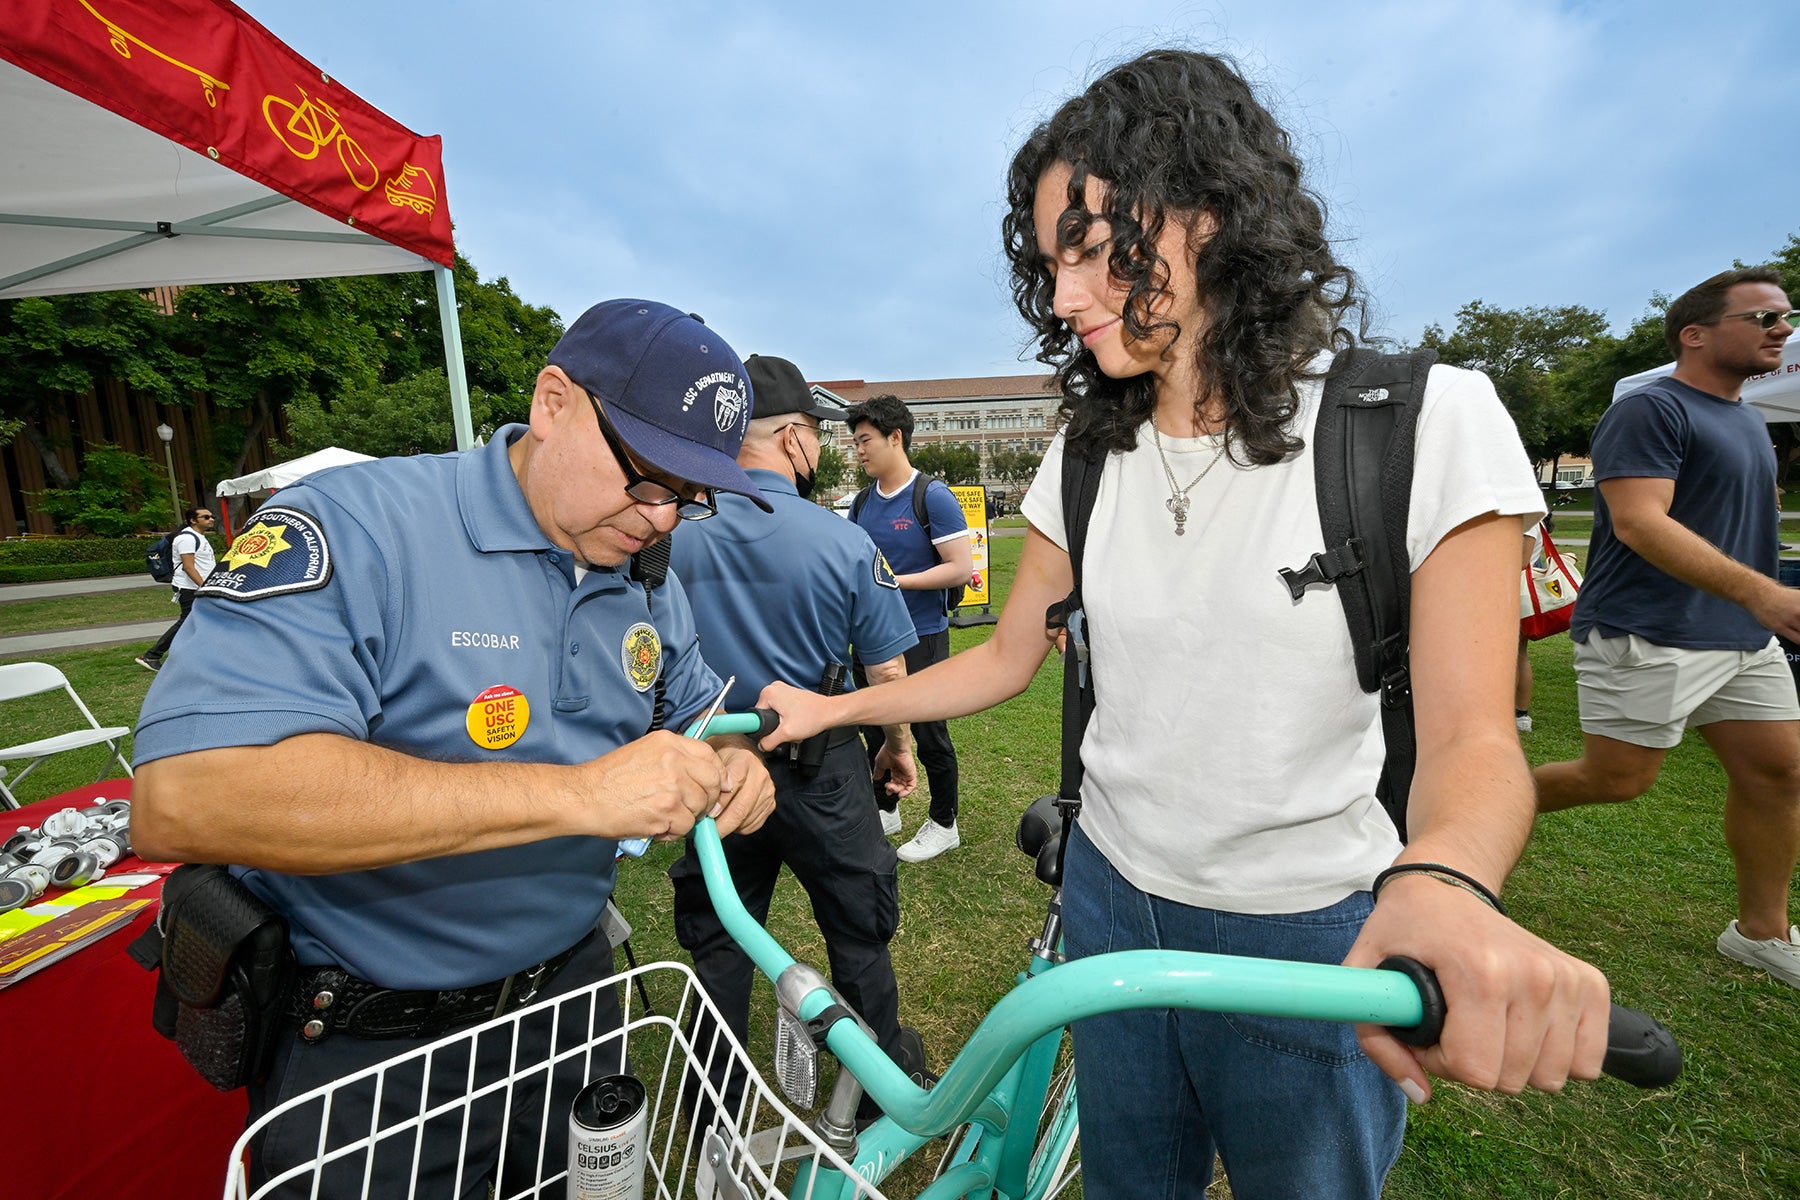 USC Safety Days: Javier Escobar installs USC-branded bike bell onto student Sofia Alayo’s bike